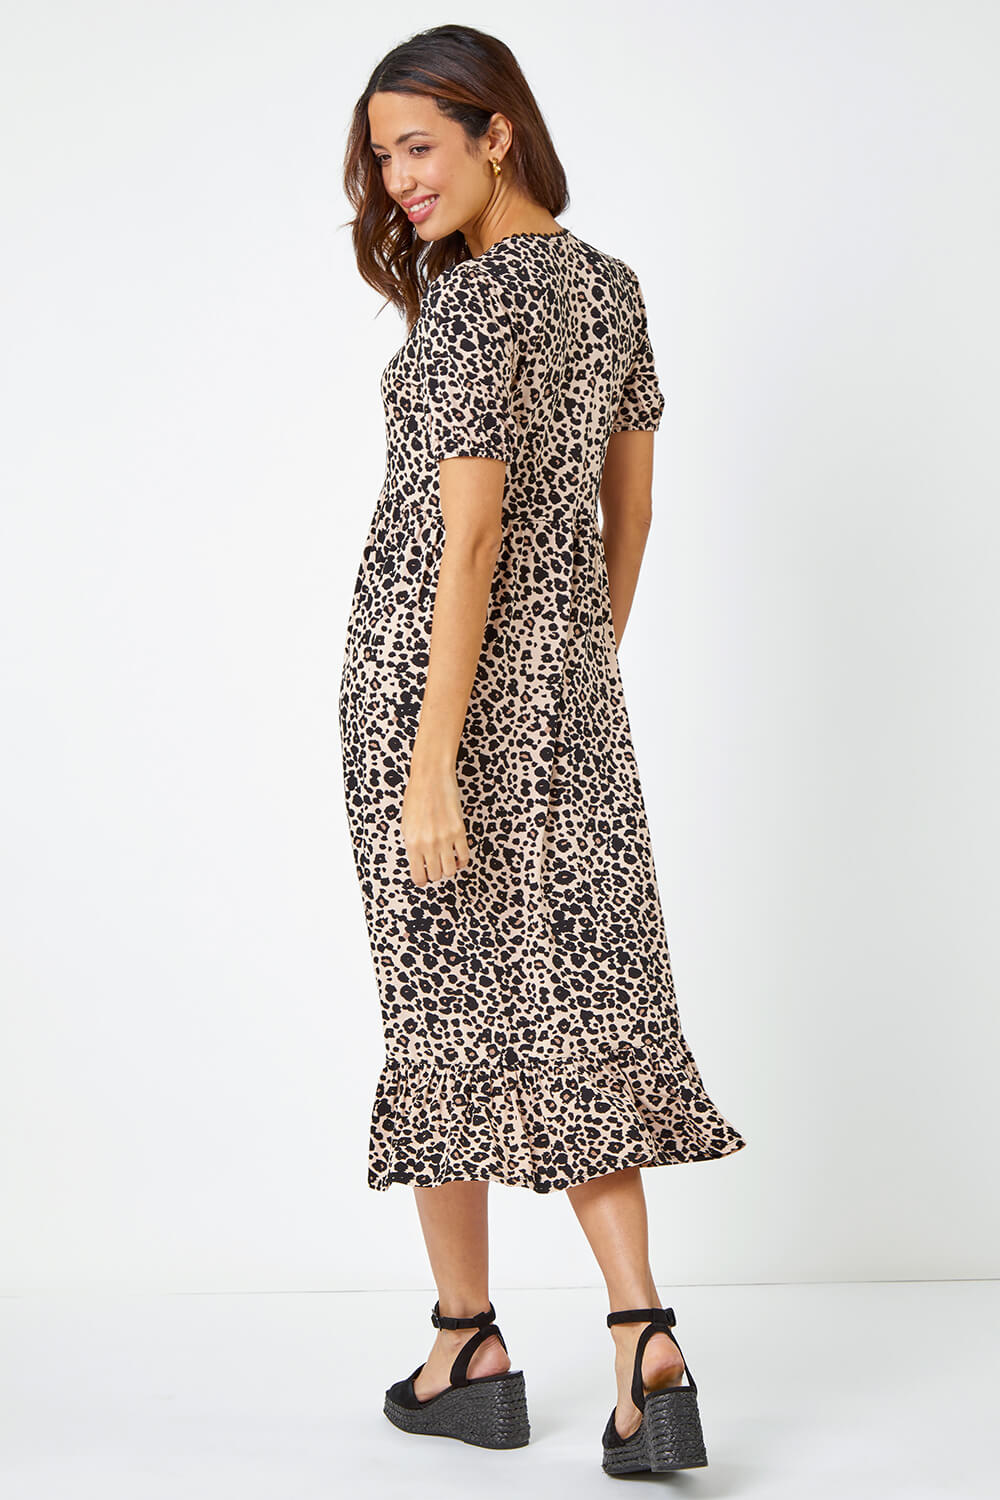 Black Leopard Print Lace Trim Midi Dress, Image 4 of 6